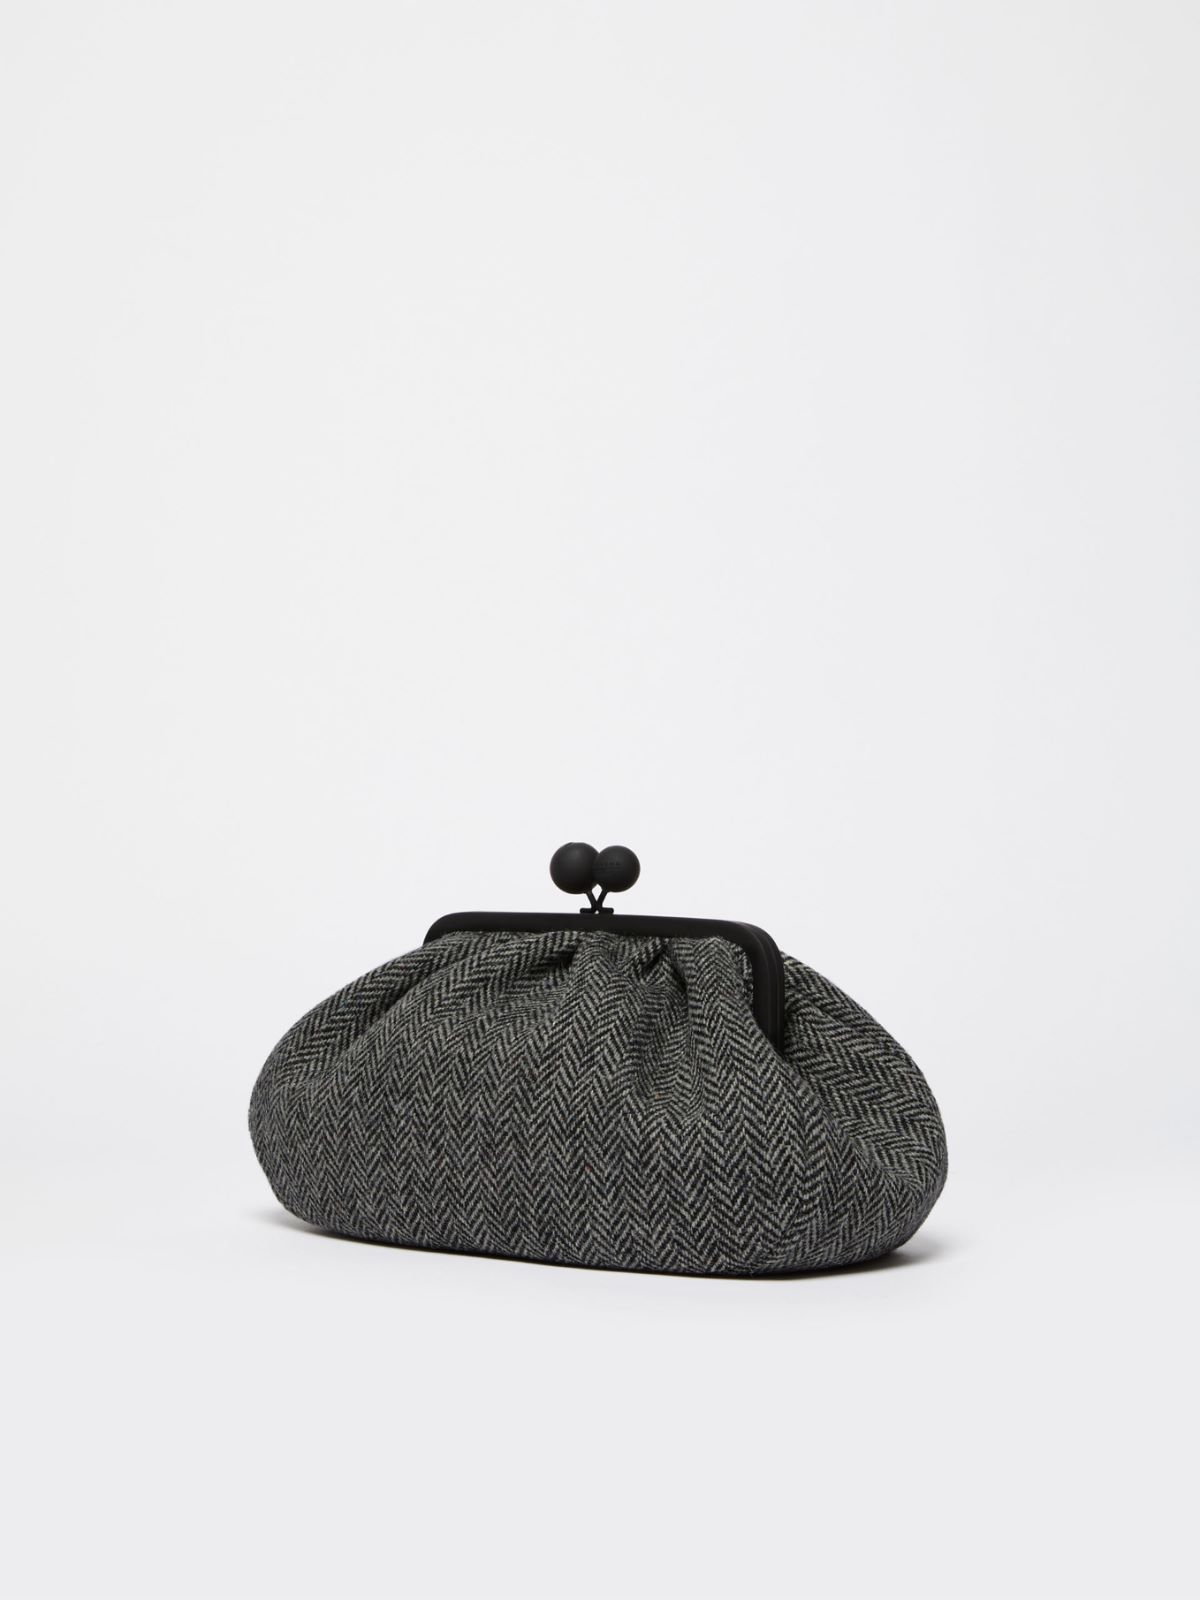 Pasticcino Bag Medium in lana chevron - ANTRACITE - Weekend Max Mara - 2